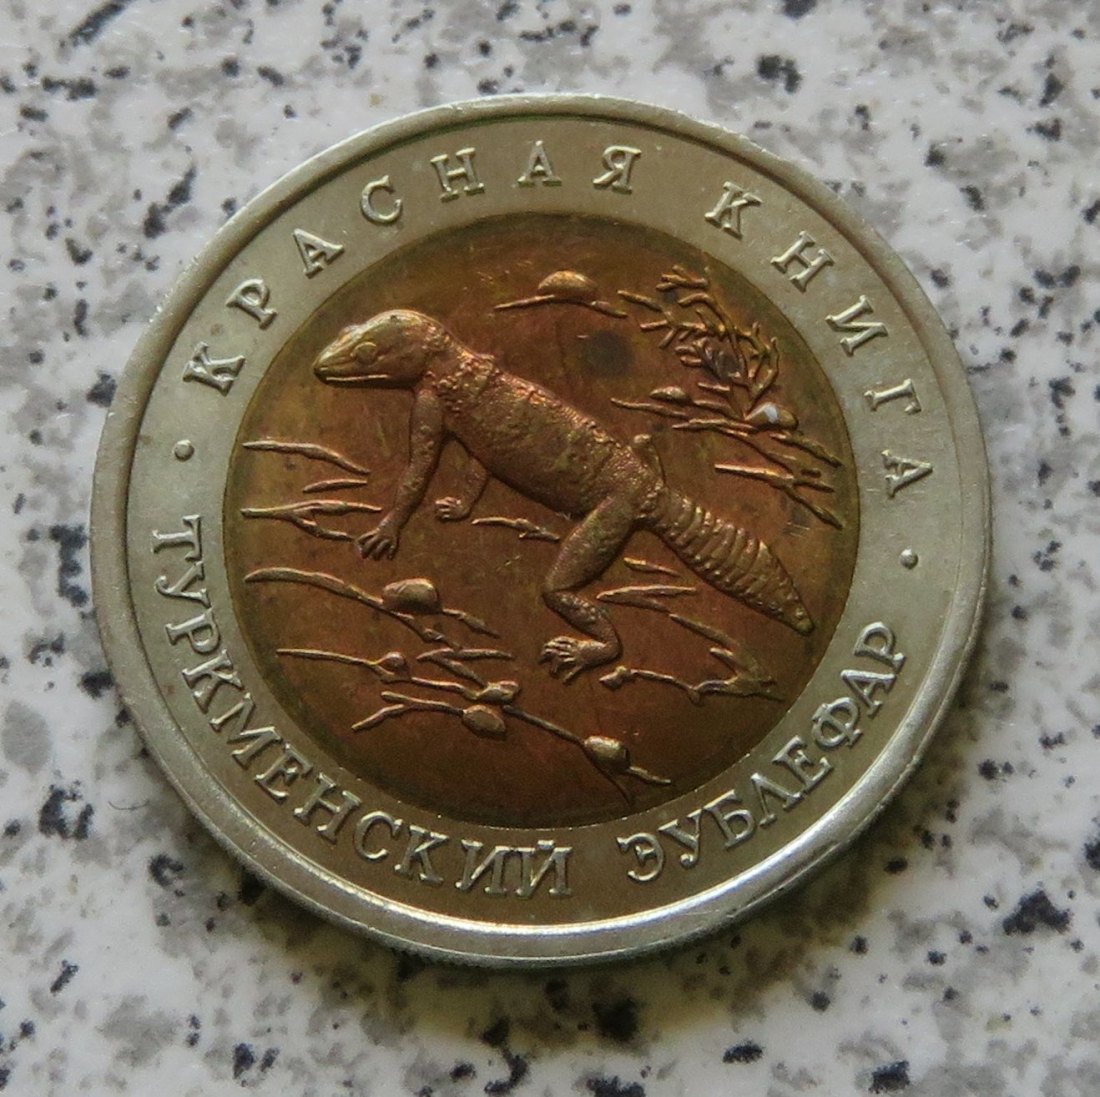  Russland 50 Rubel 1993 Rotes Buch Gecko   